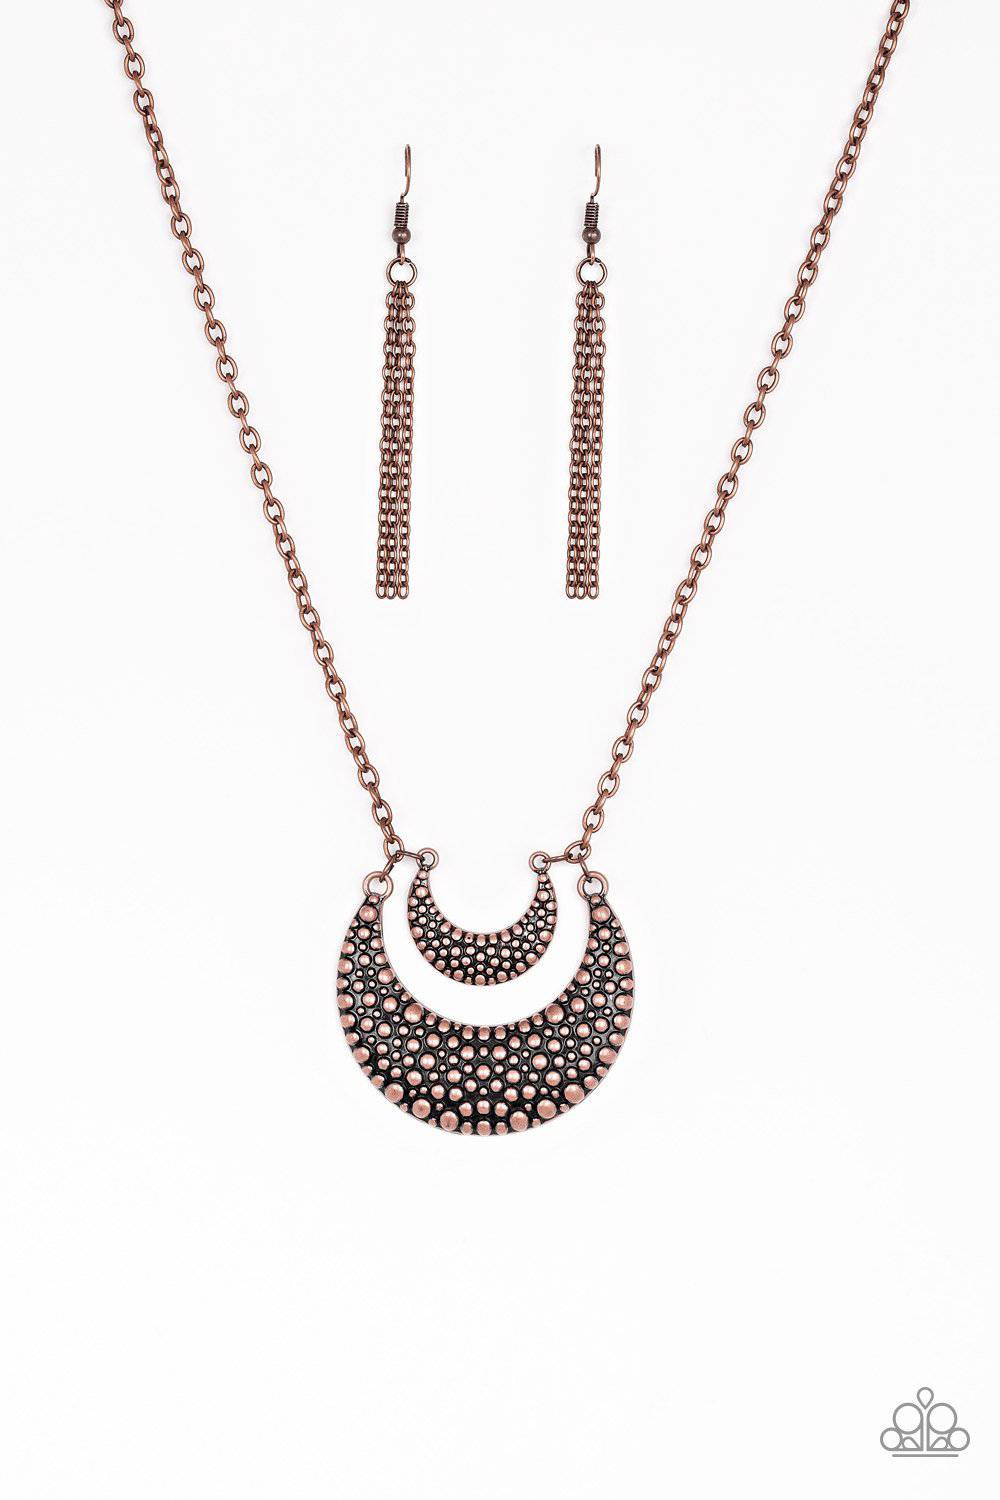 Get Well MOON - Copper-Paparazzi Accessories - GlaMarous Titi Jewels